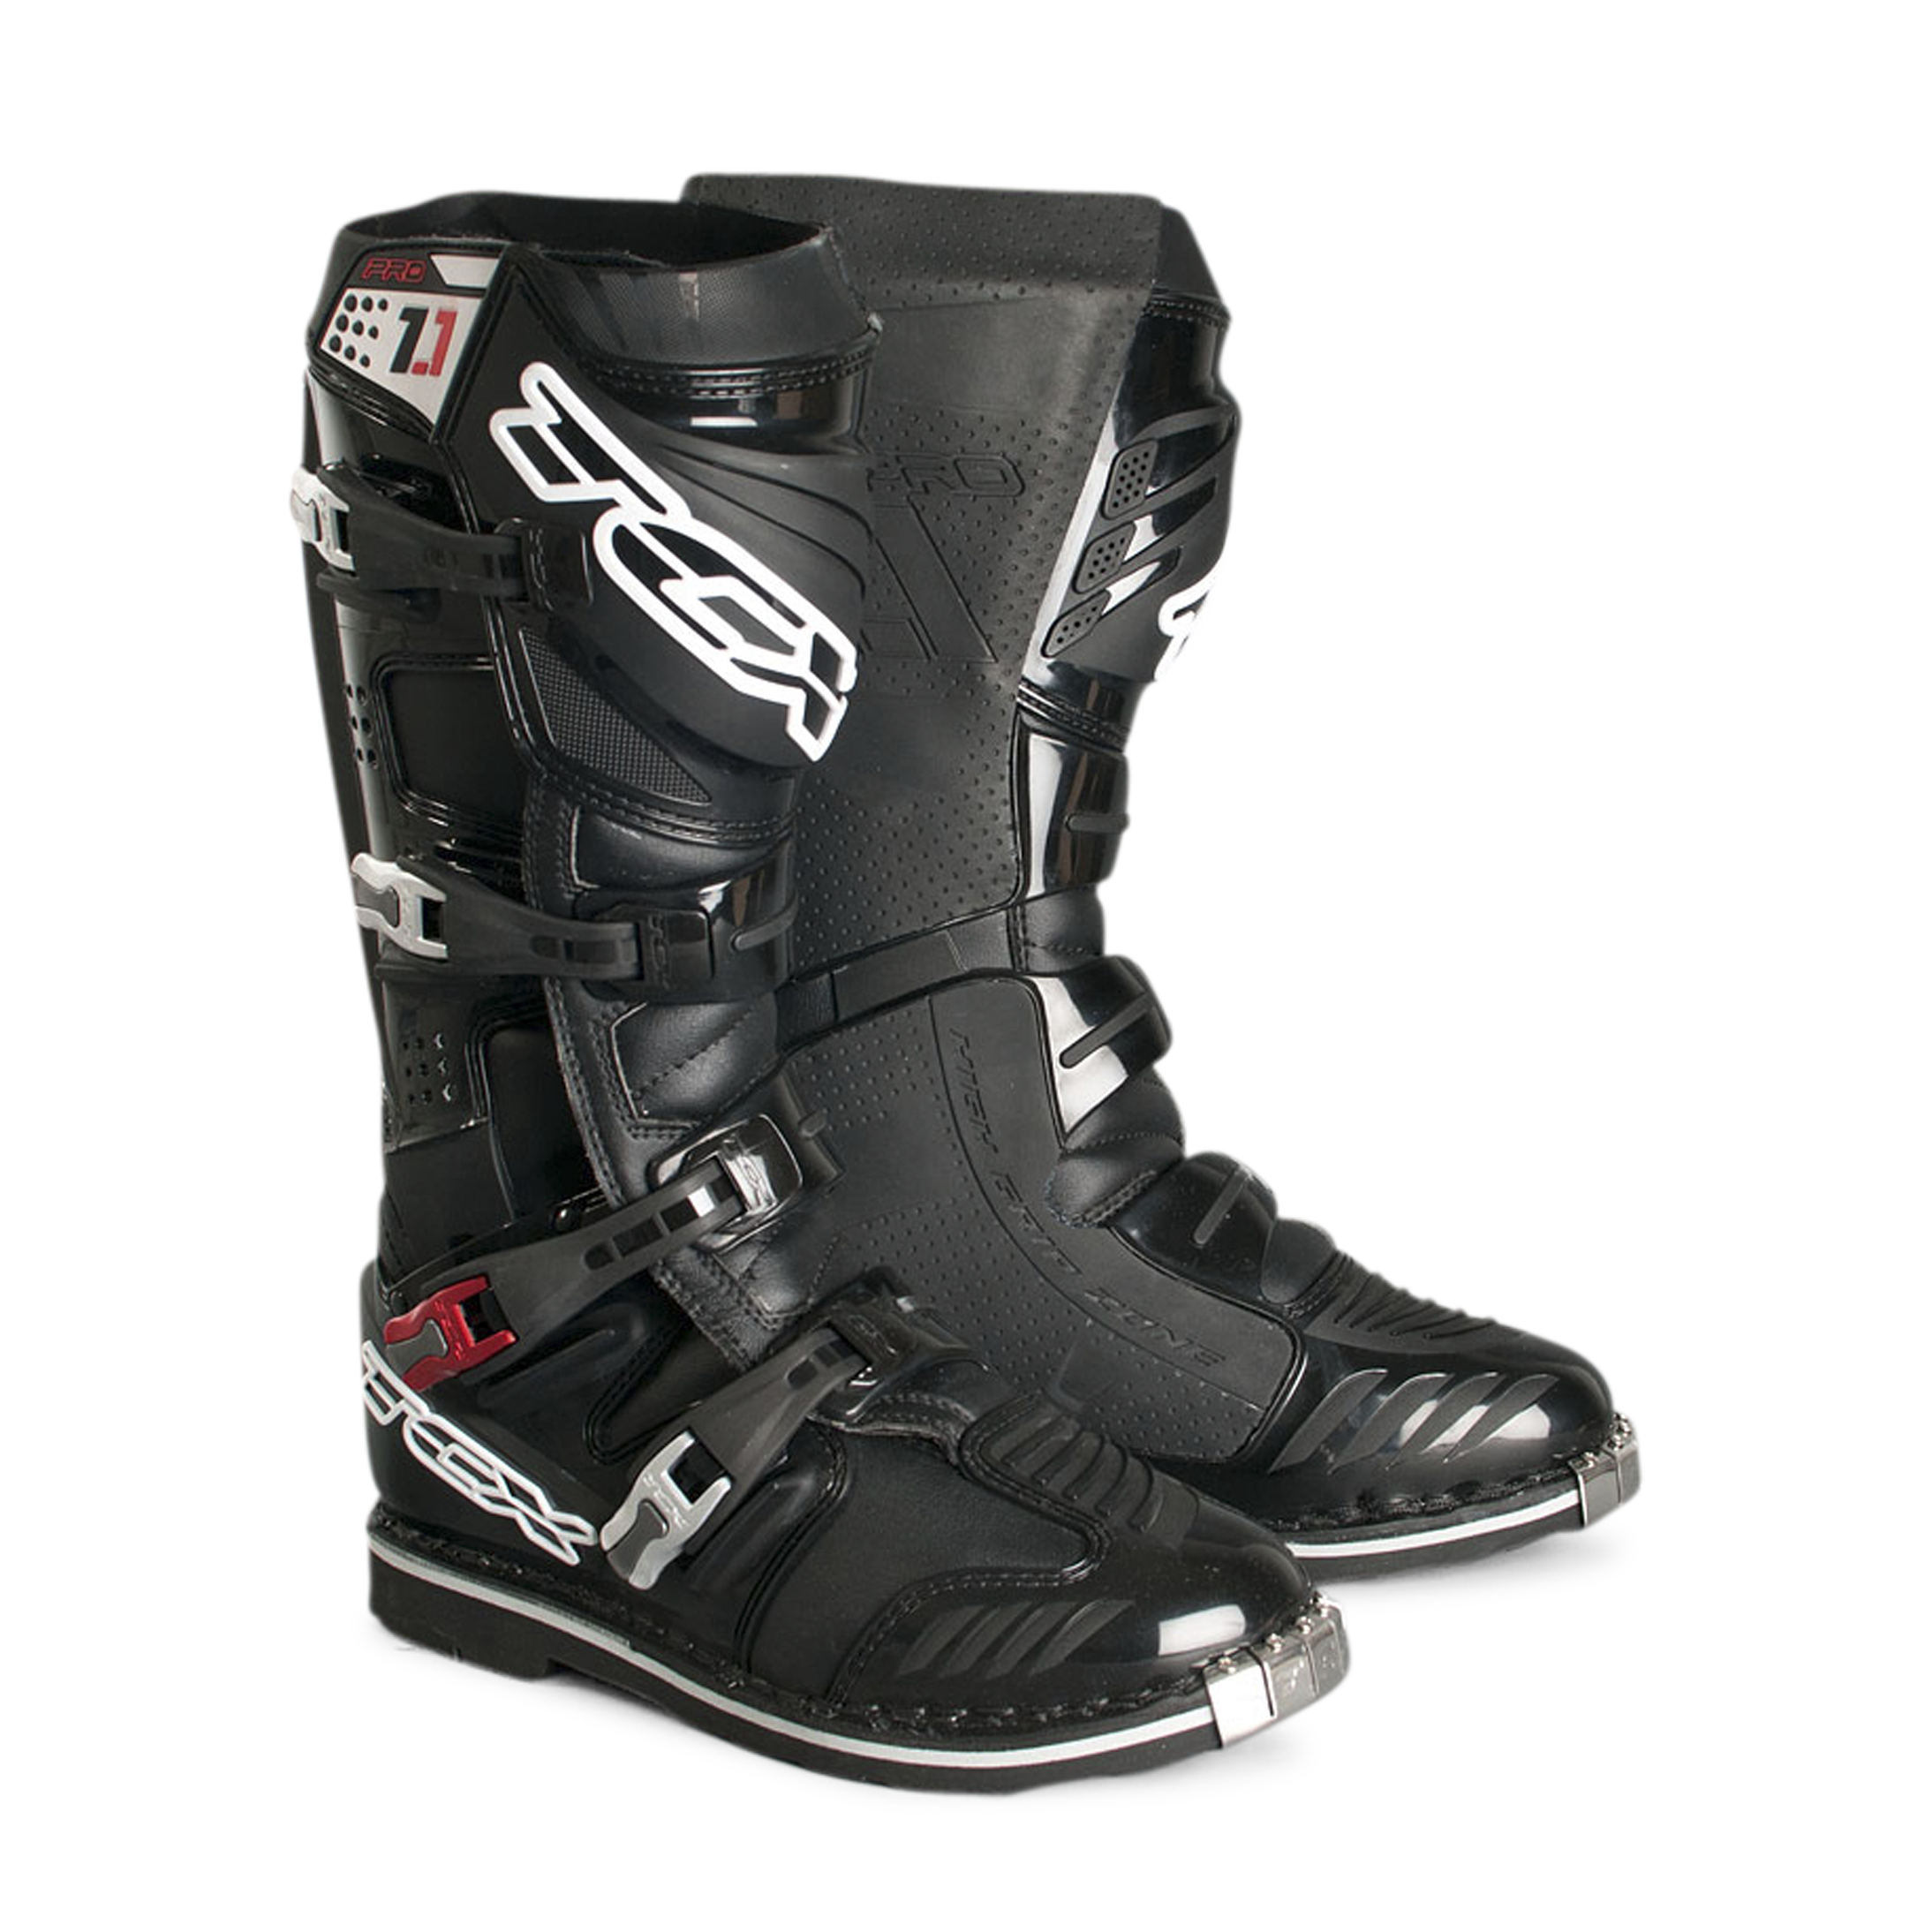 TCX Pro 1.1 Boots Black - Buy now, get 